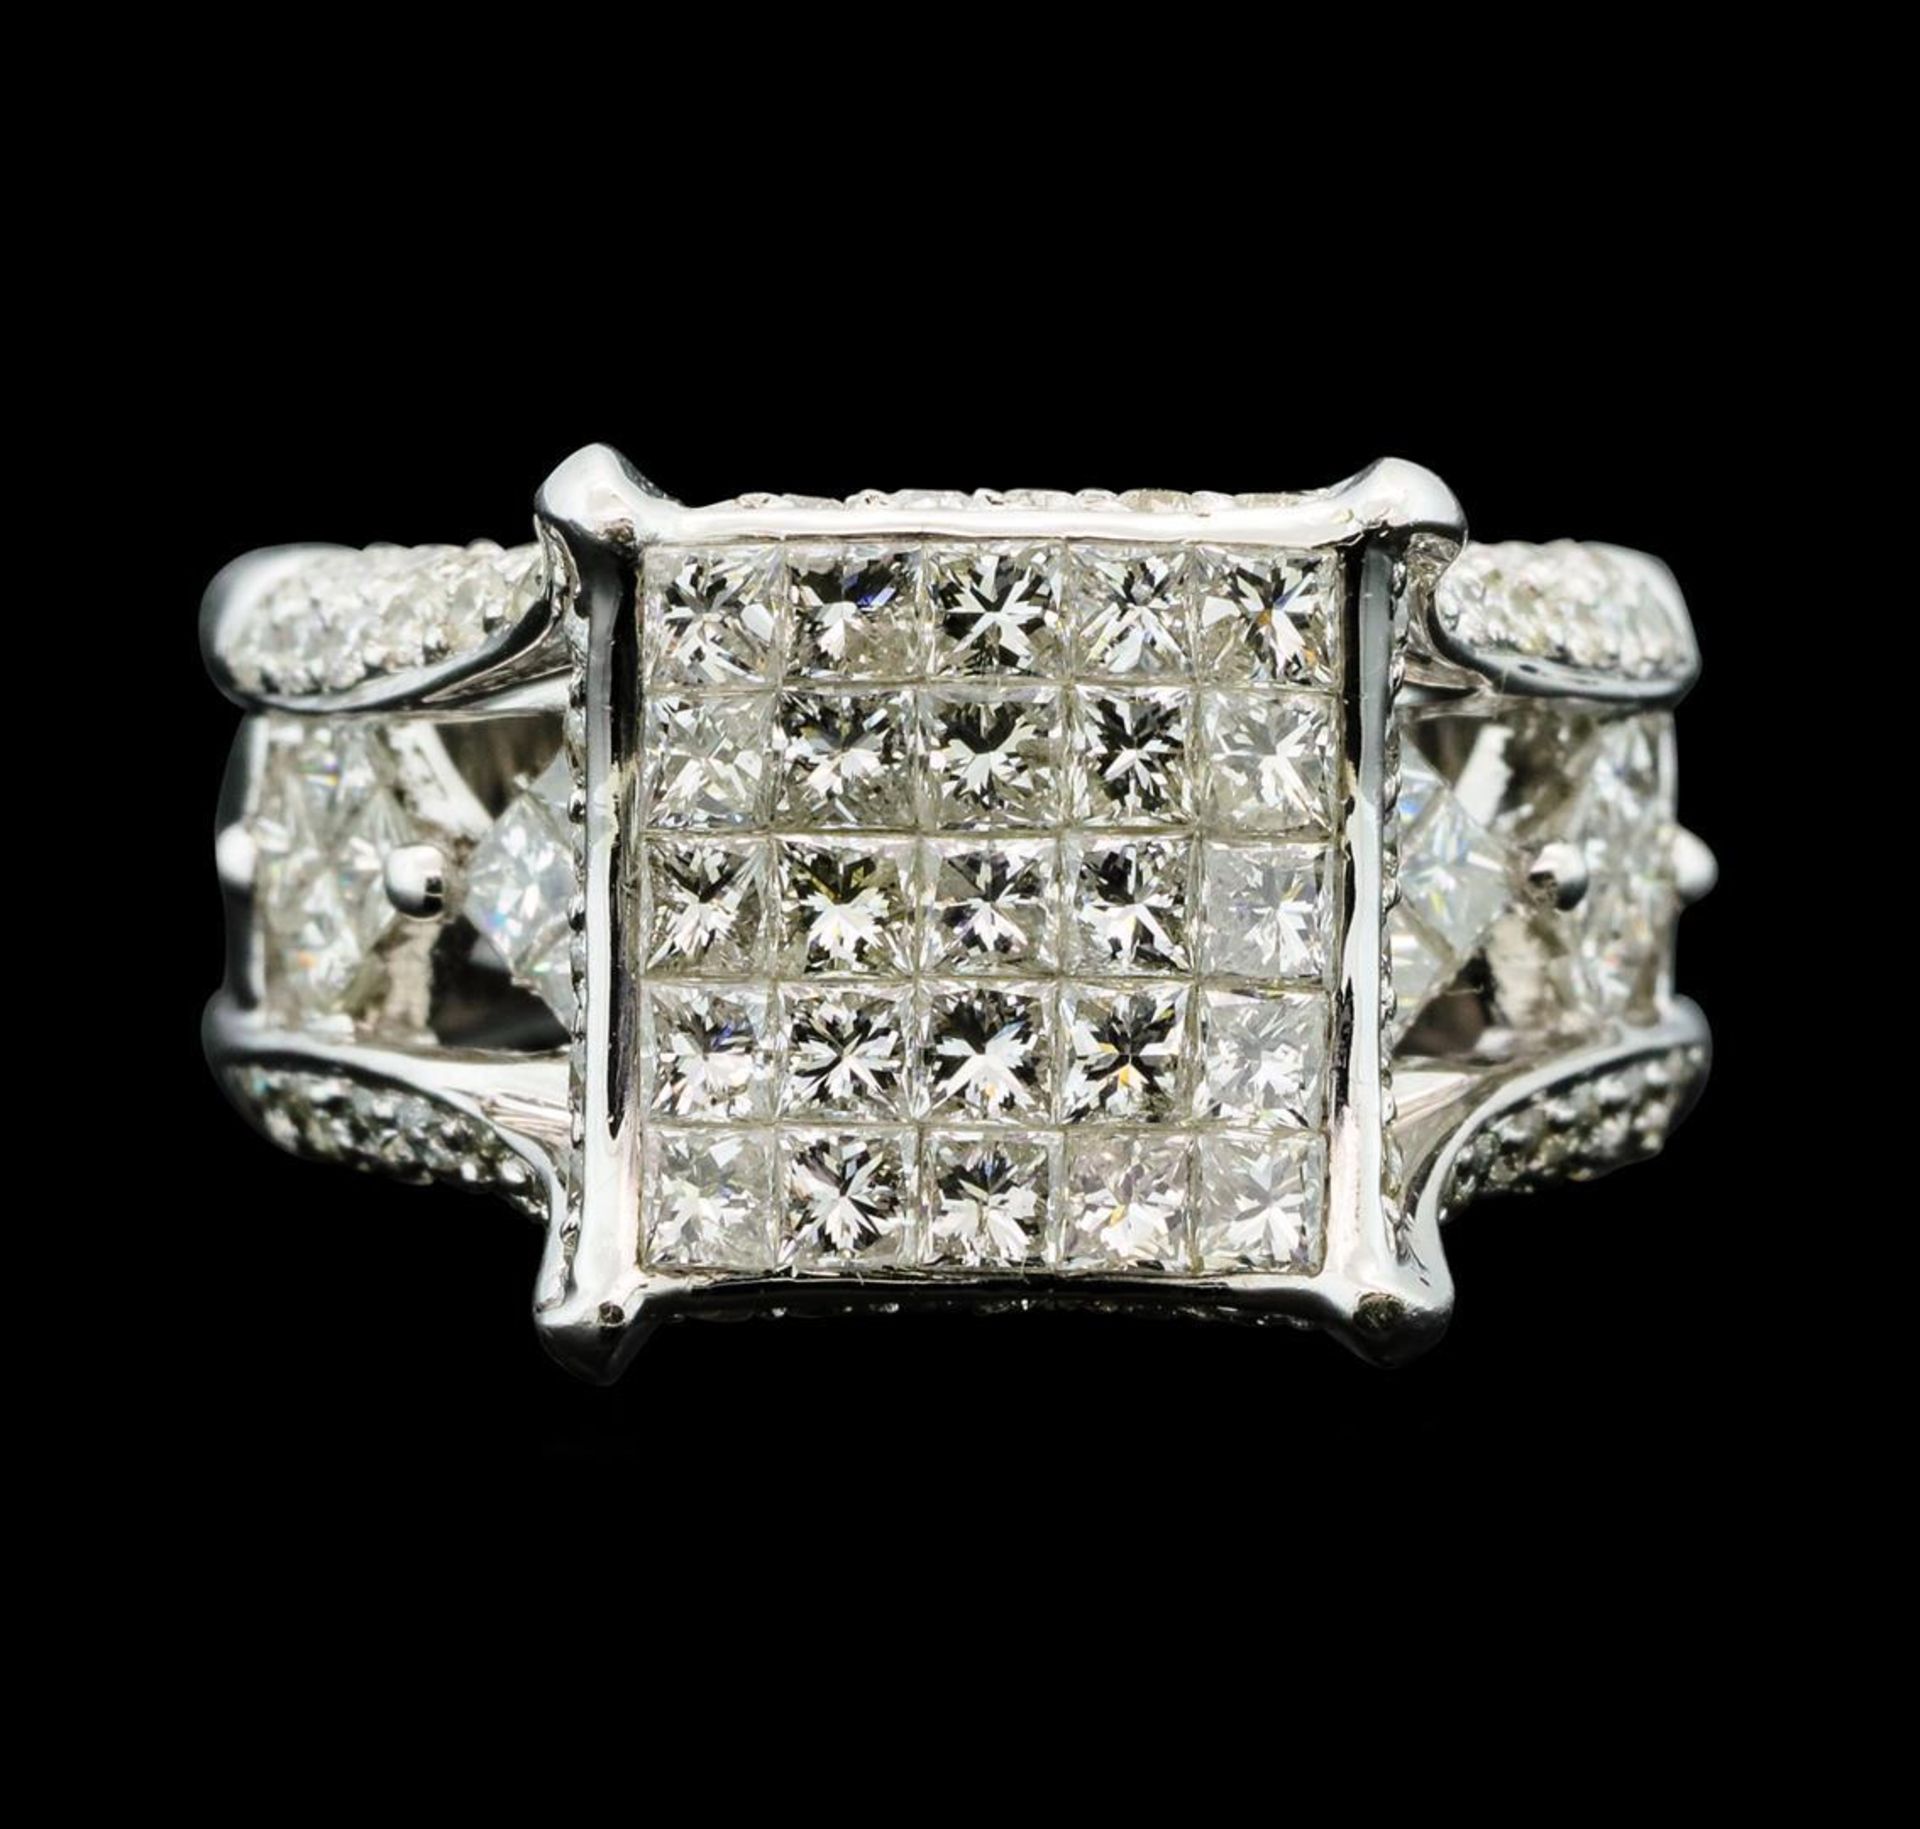 3.12 ctw Diamond Ring - 14KT White Gold - Image 2 of 5